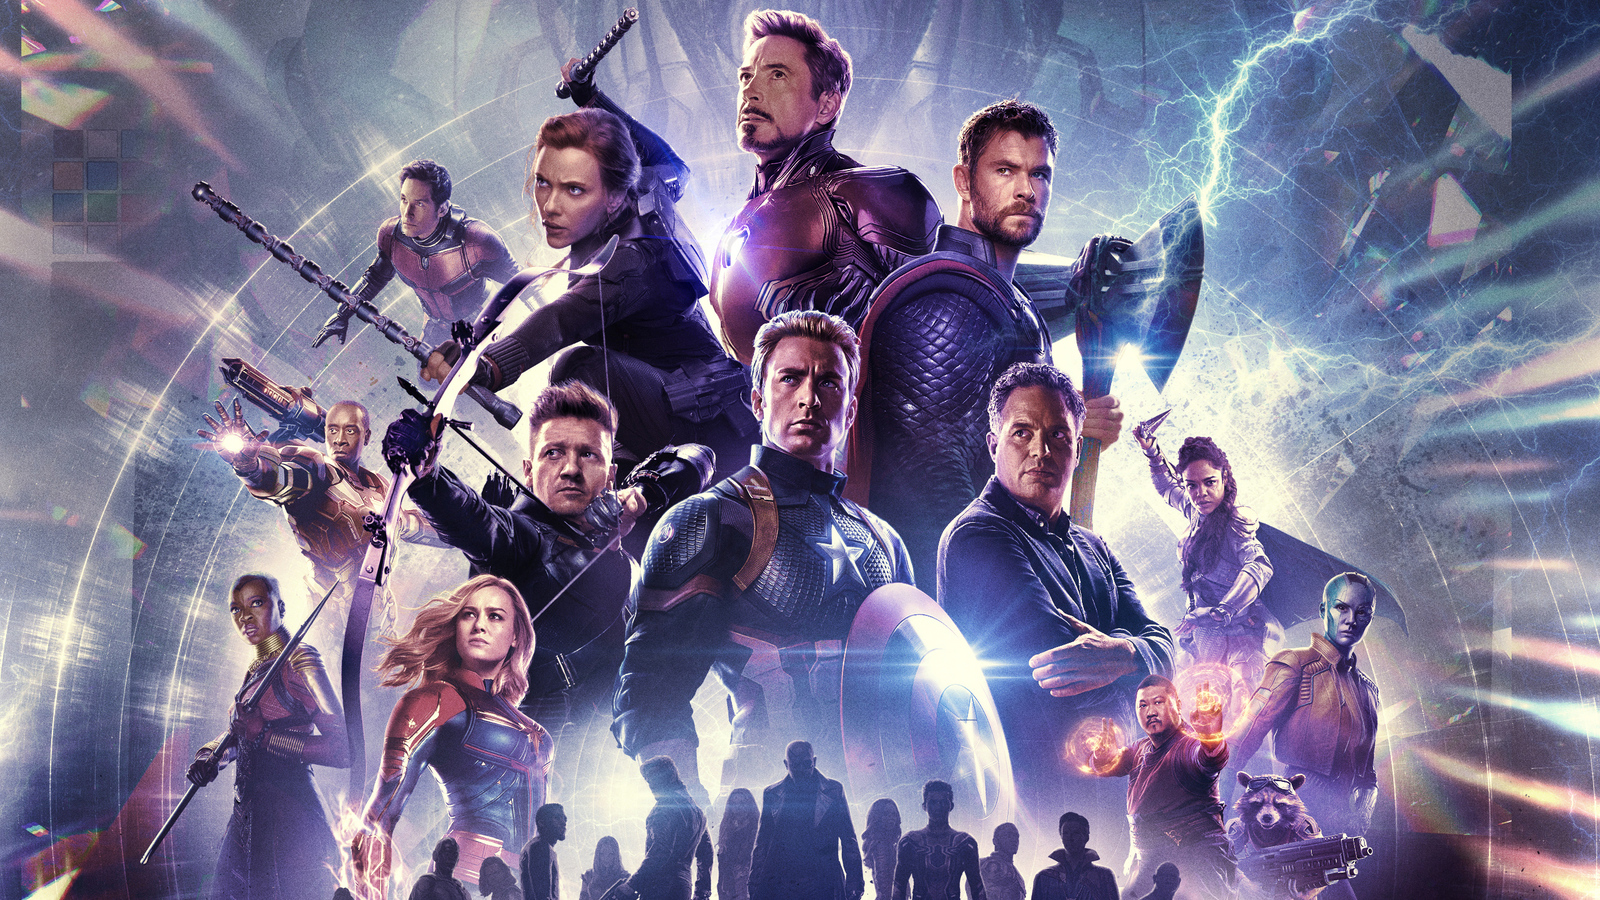 Avengers Endgame Hd Poster Wallpapers